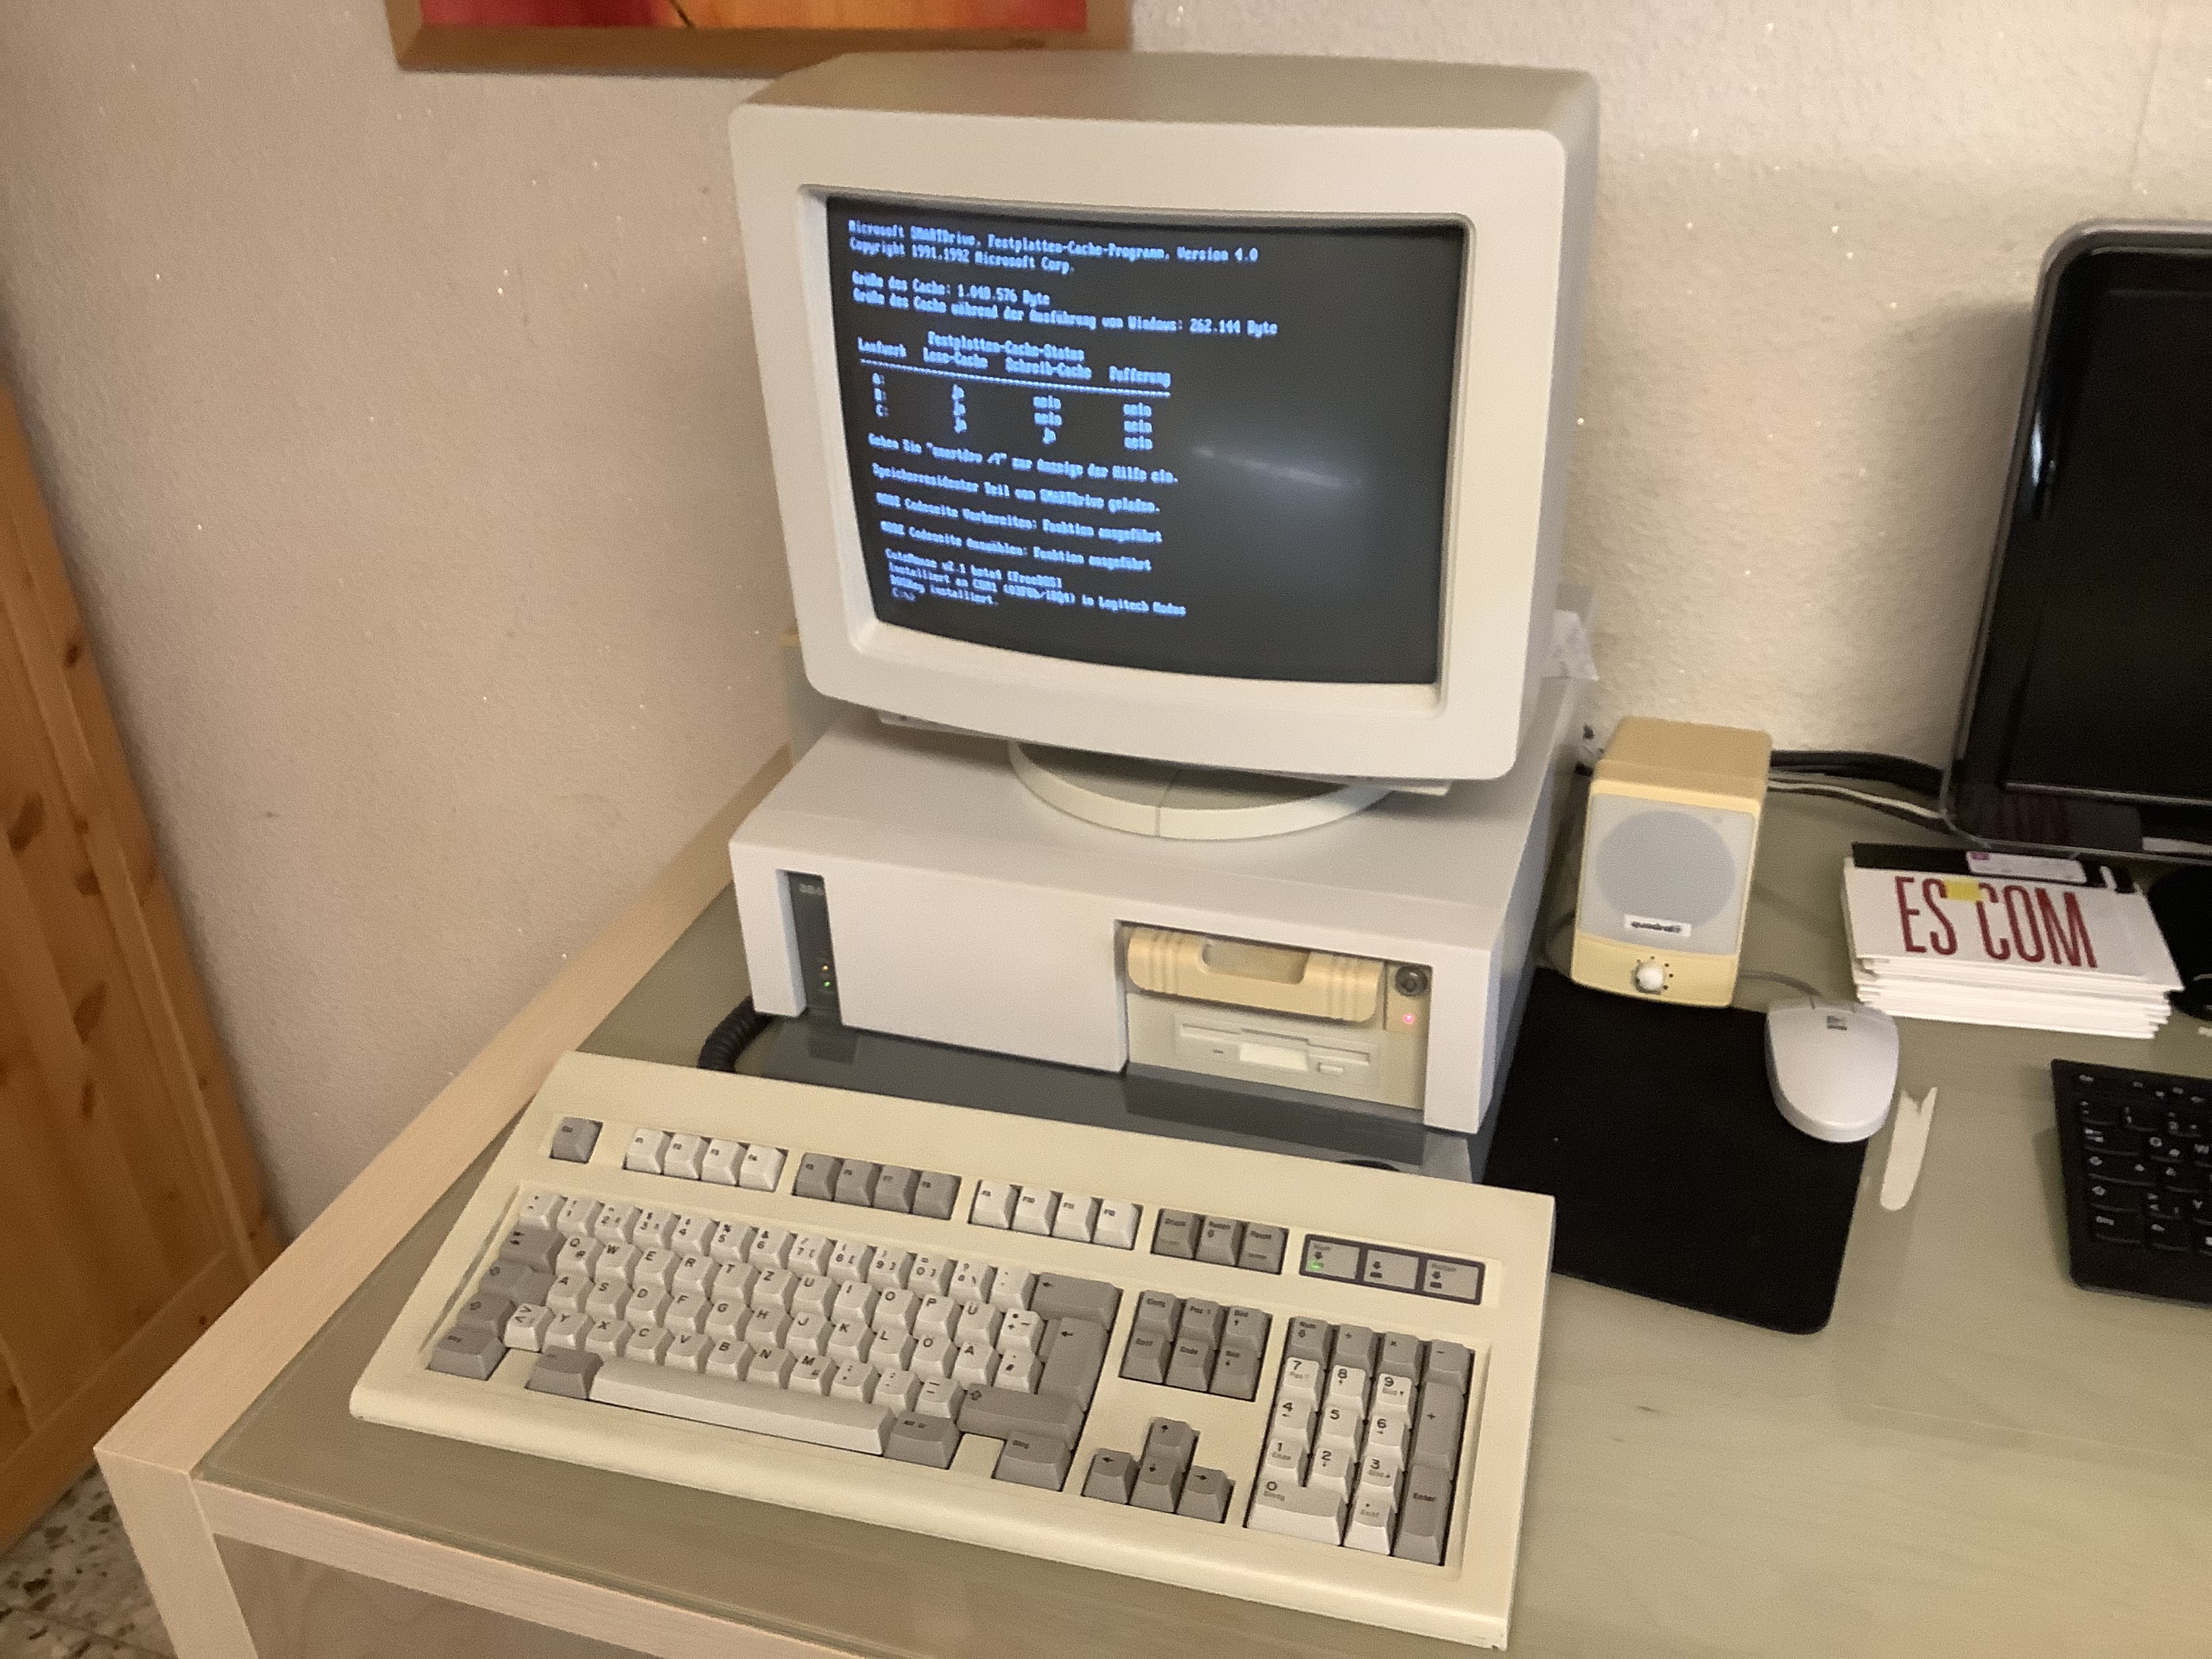 Gesamtansicht des fertig aufbereiteten Atari PC5